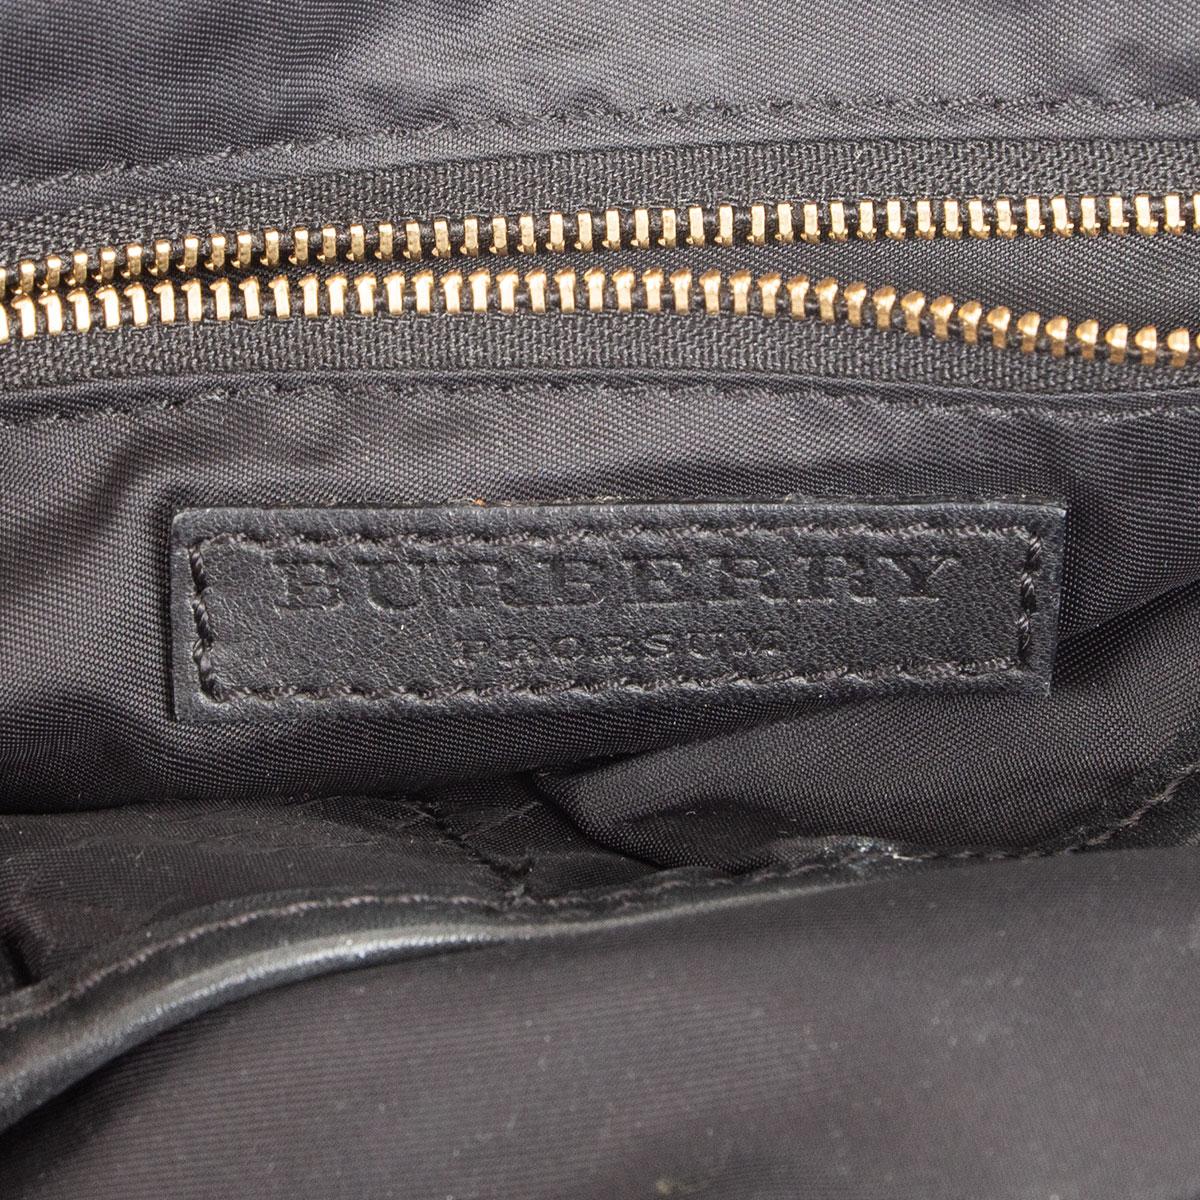 Black BURBERRY PRORSUM black leather WILBUR Tassel Cross Body Bag